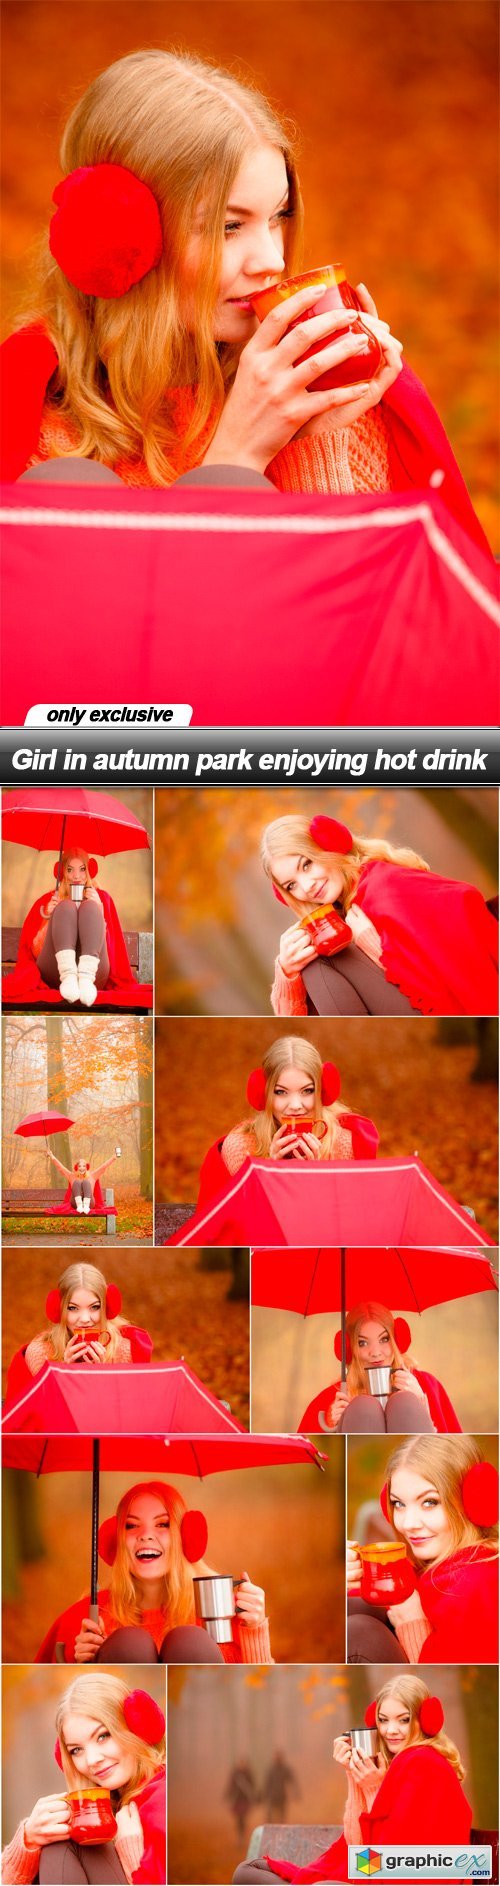 Girl in autumn park enjoying hot drink - 11 UHQ JPEG